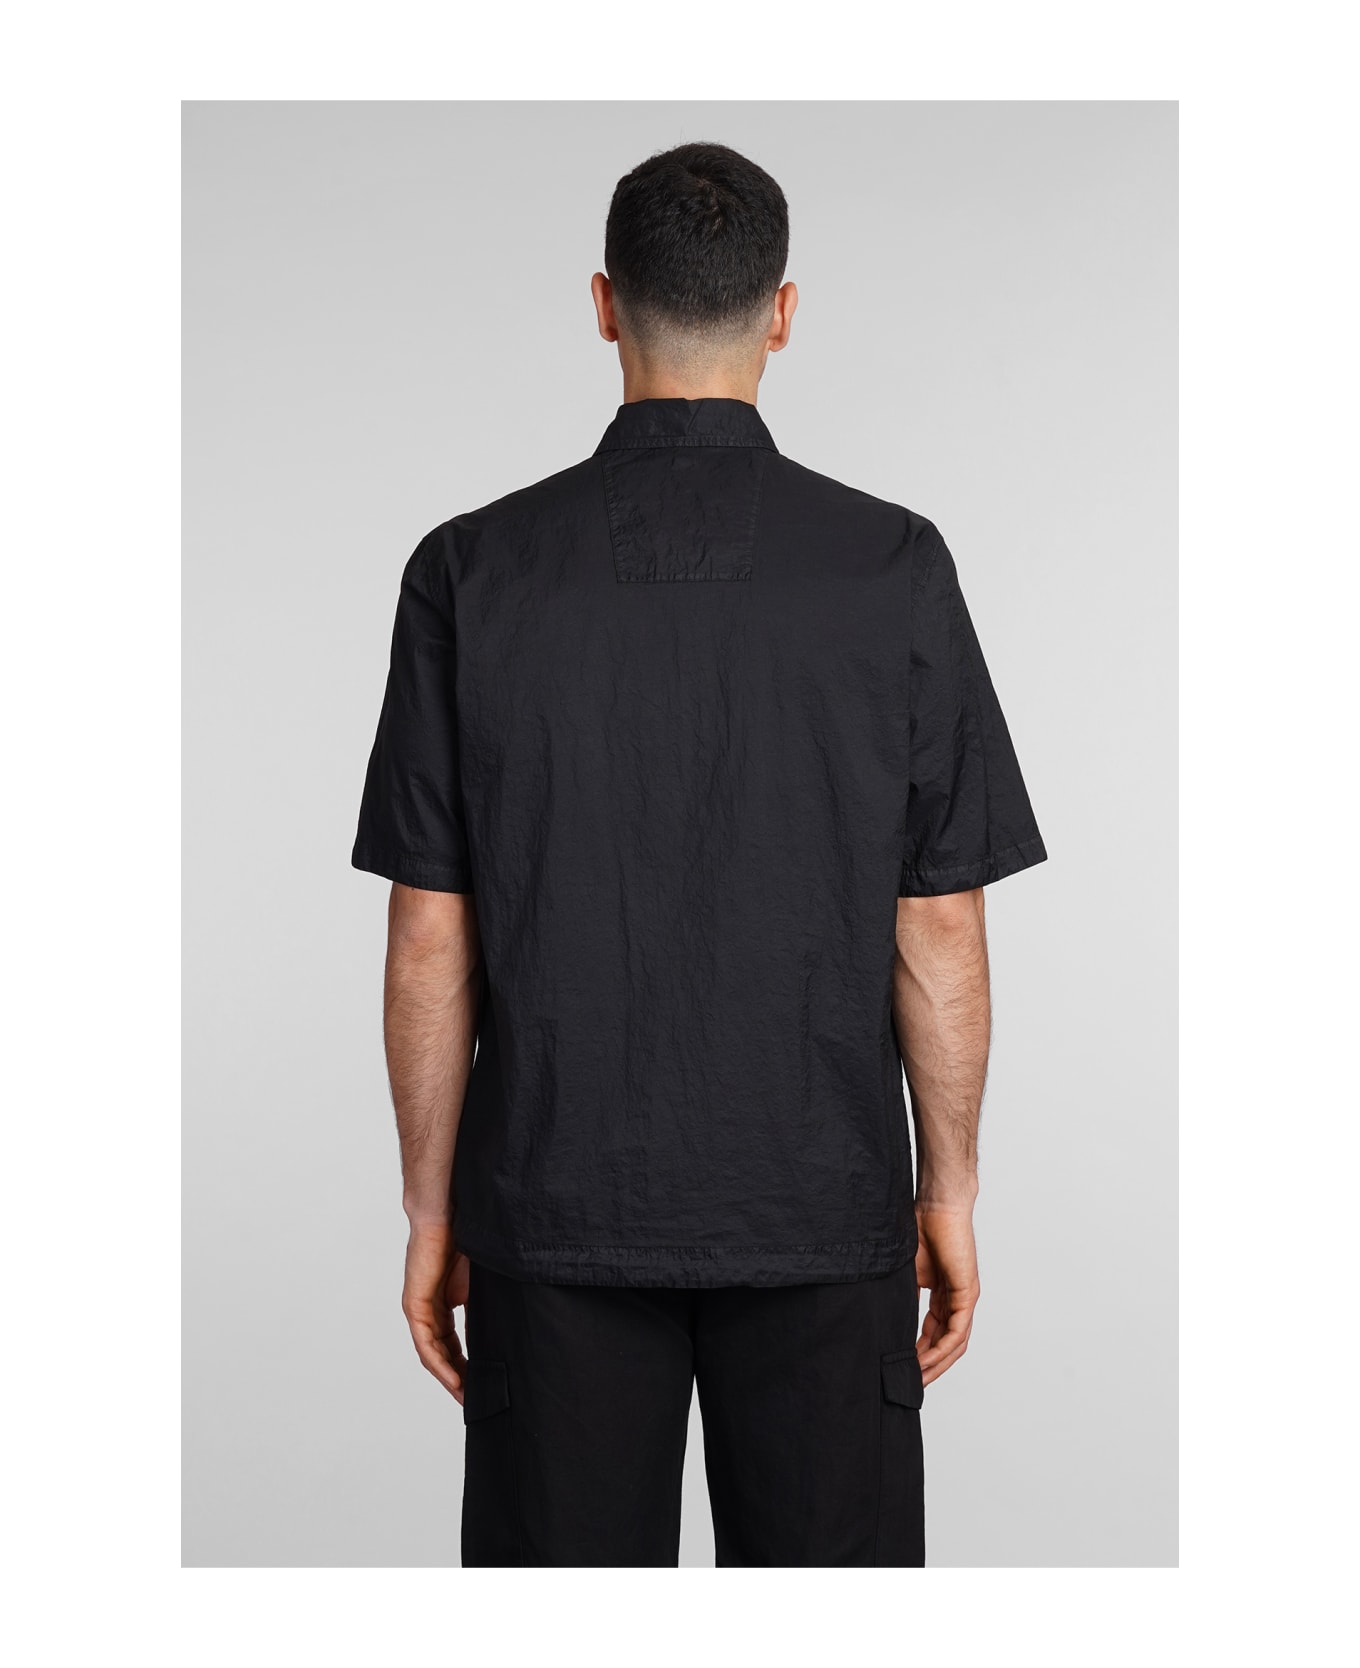 C.P. Company Shirt In Black Polyamide - black